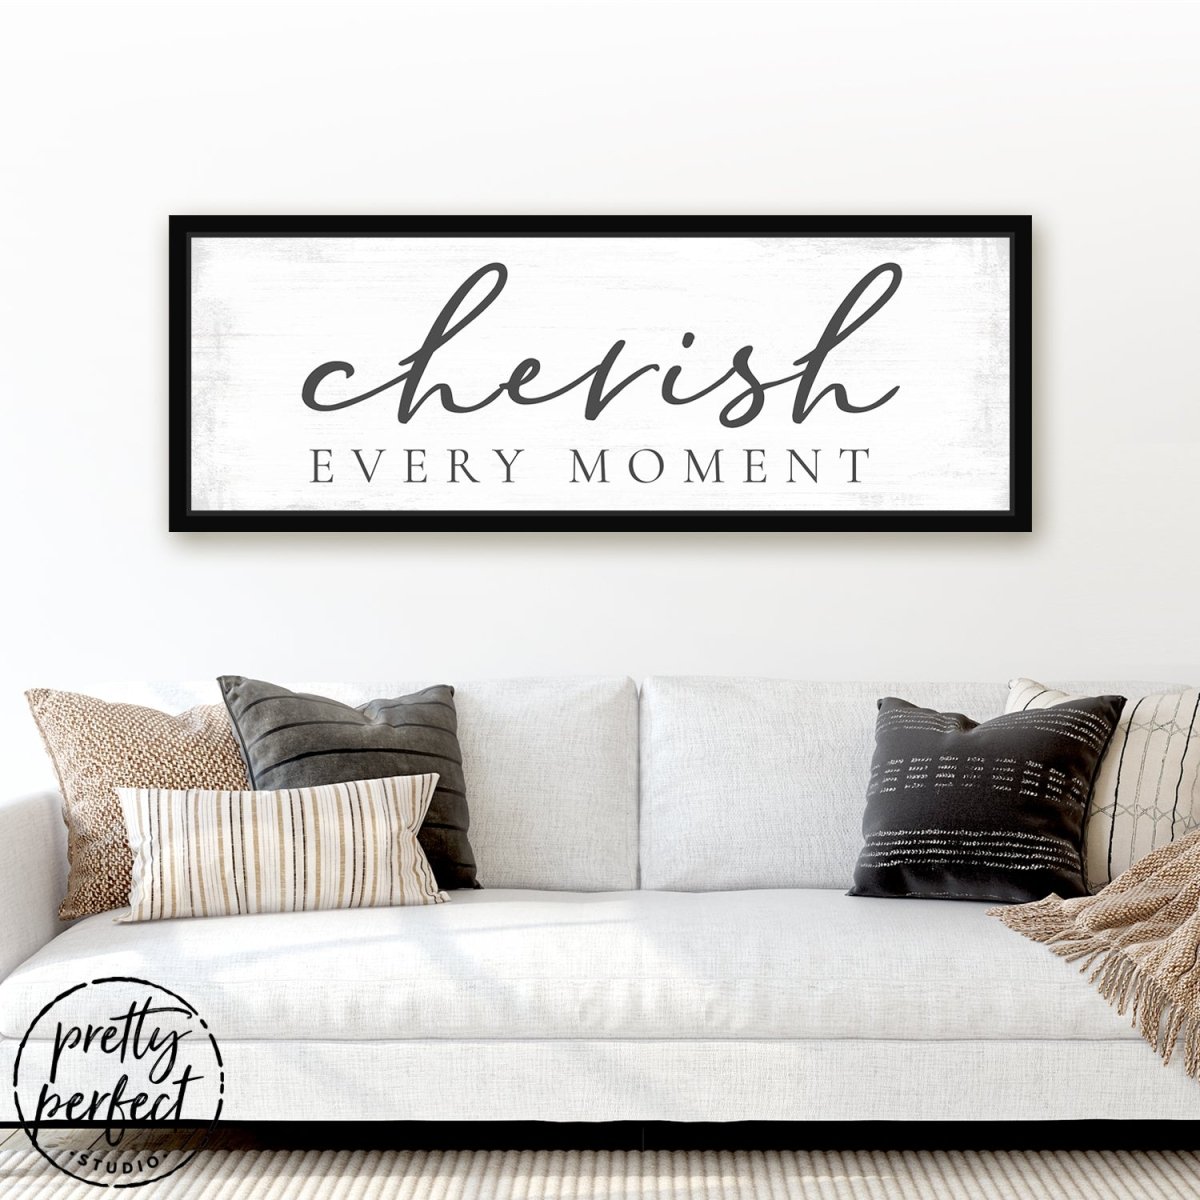 Cherish Every Moment Quote Wall Art Above Couch - Pretty Perfect Studio